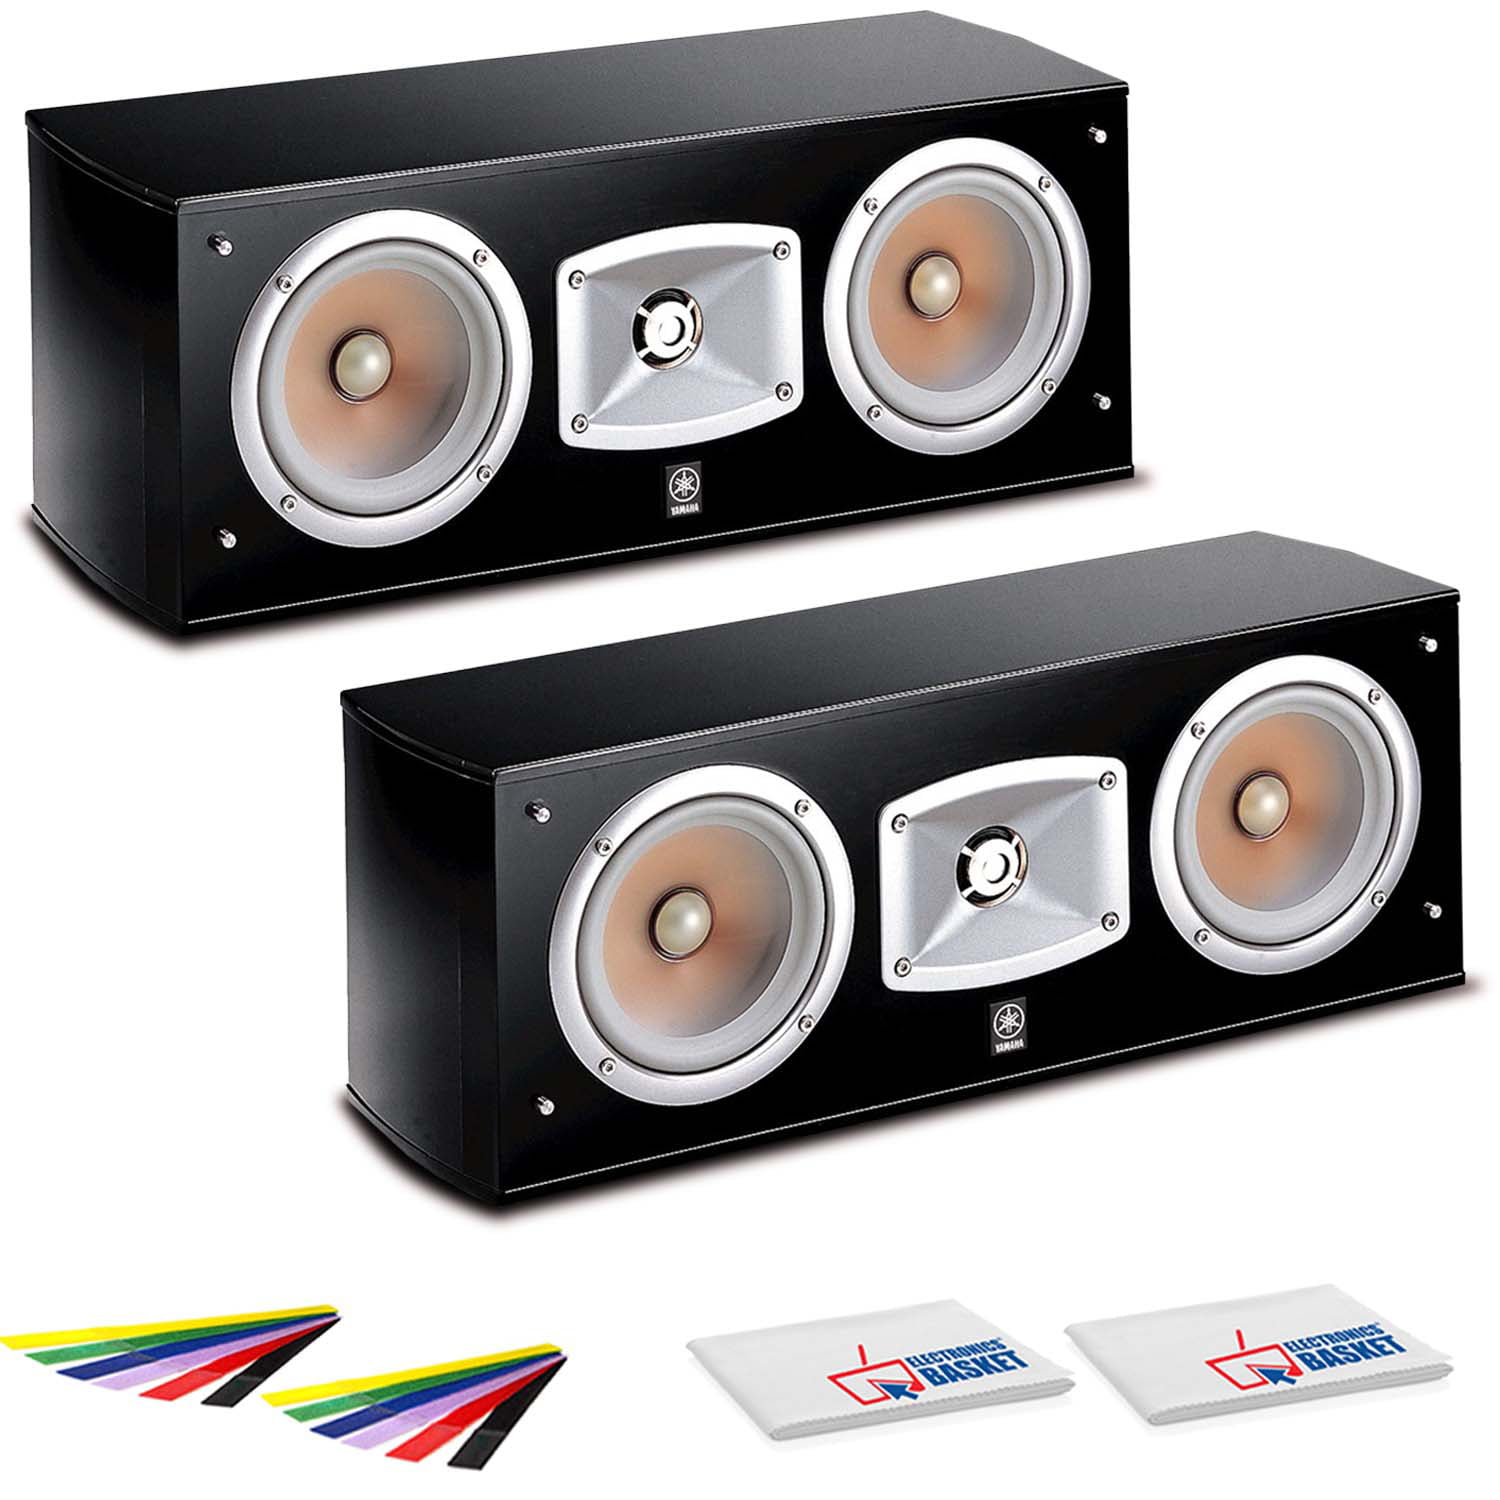 2 x Yamaha NS-C444 2-Way Center Channel Speaker (NS-C444) + 2 x Velcro  Cable Straps + 2 x MicrofiberFiber Cloth